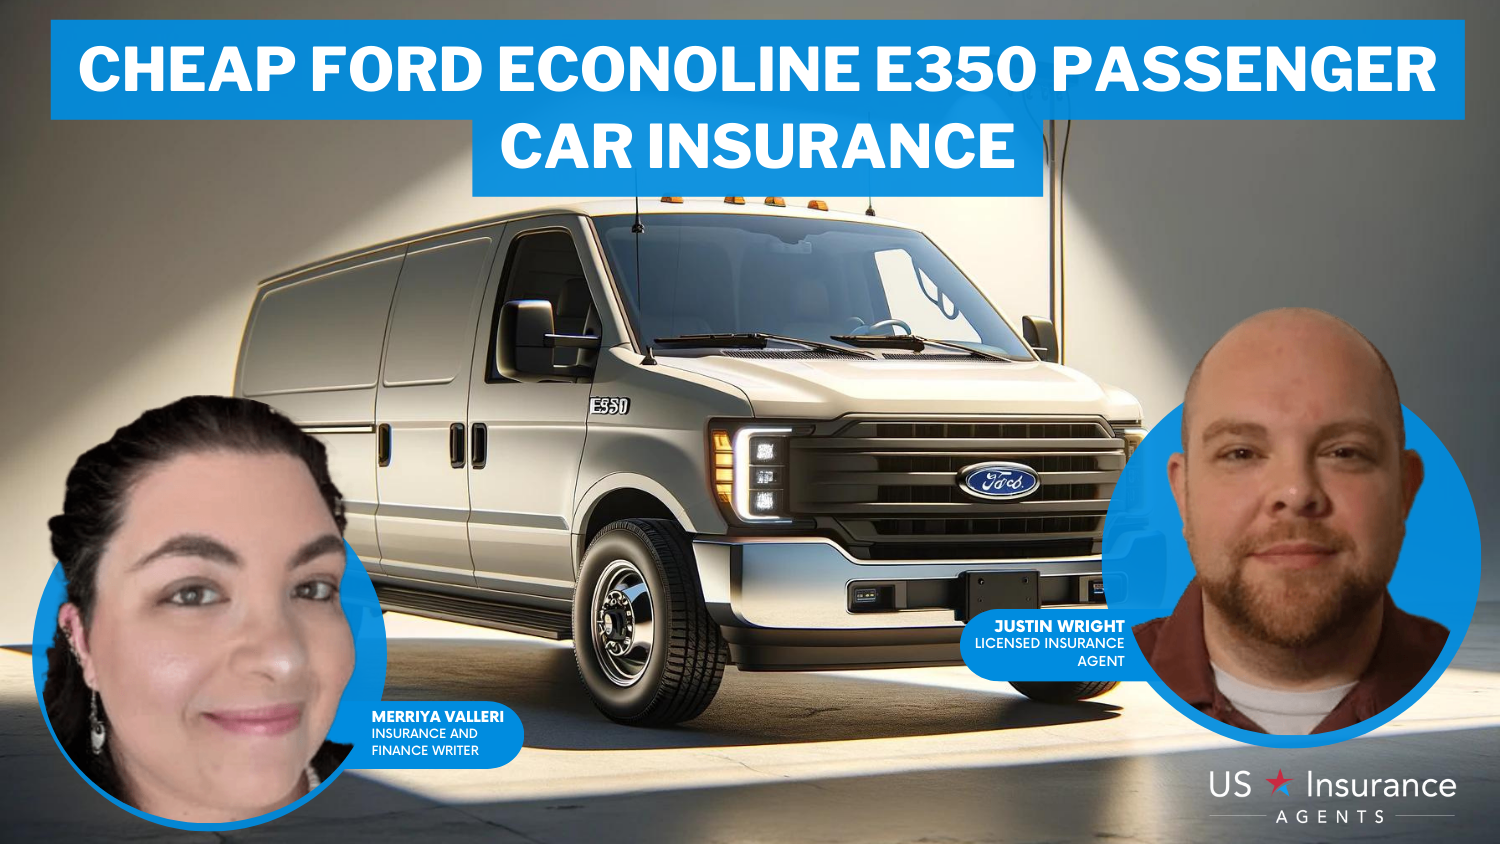 Cheap Ford Econoline E350 Passenger Car Insurance: Farmers, State Farm, and Erie